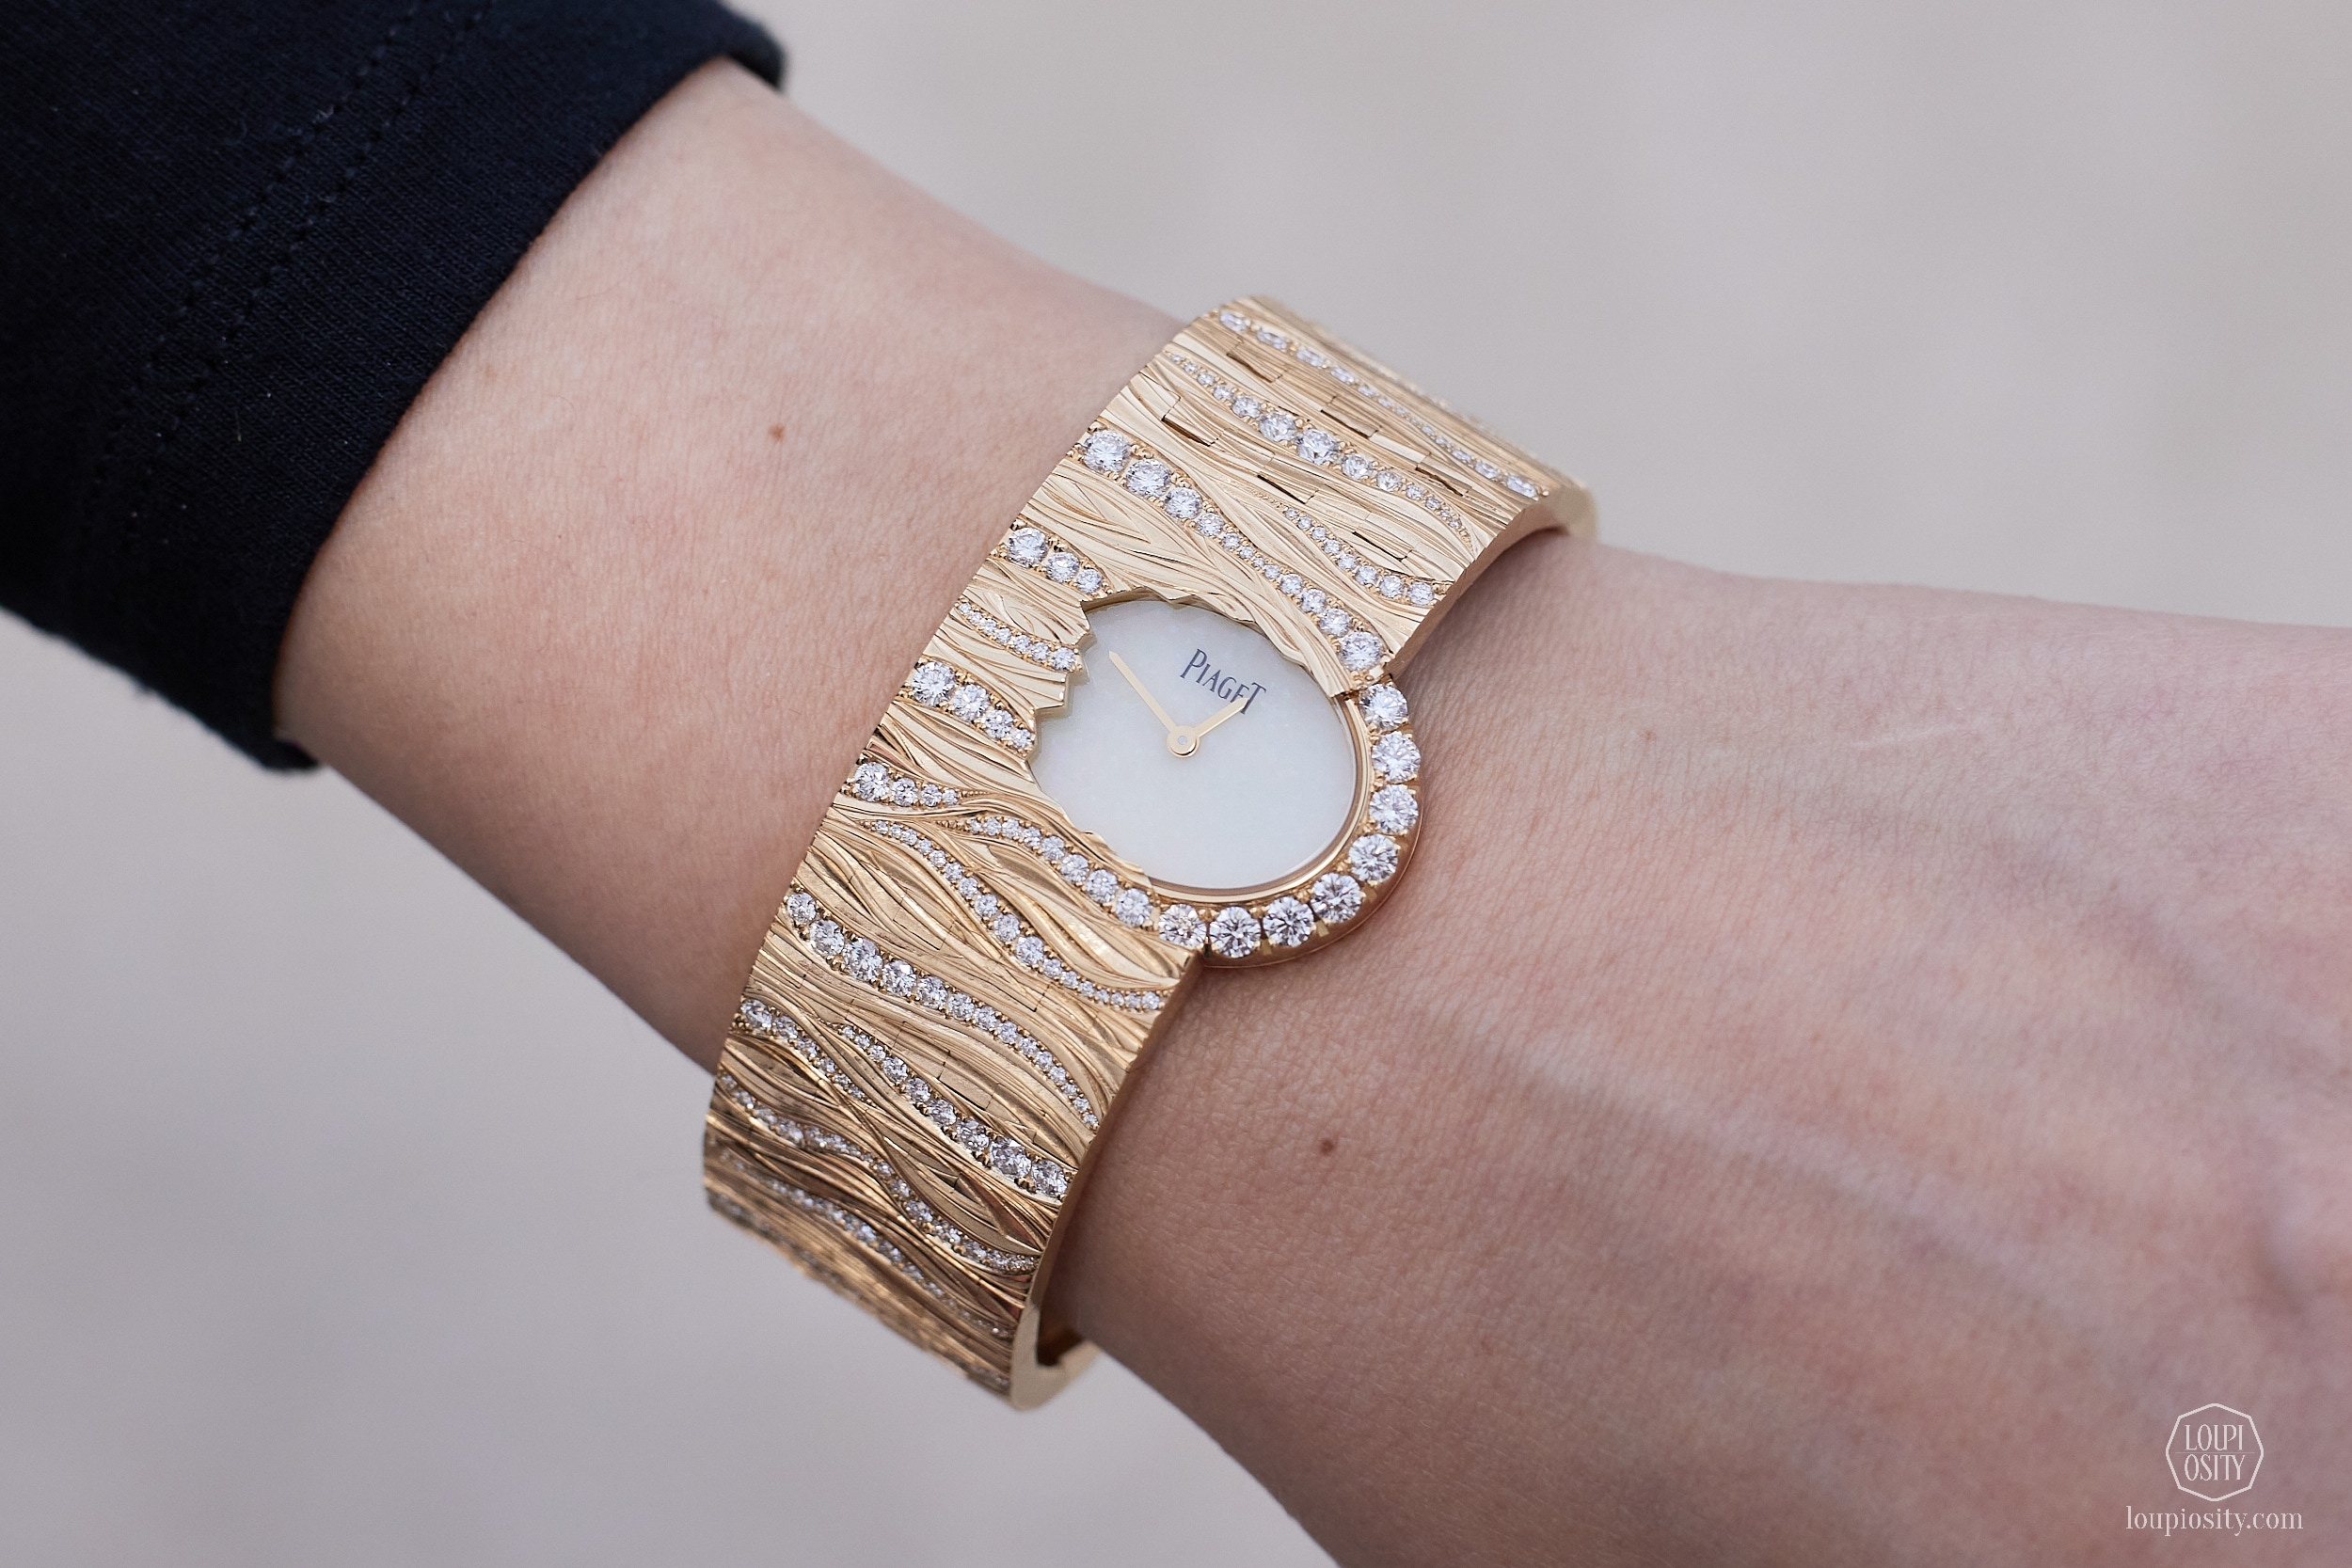 Piaget High Jewellery Cuff Watch, white opal dial